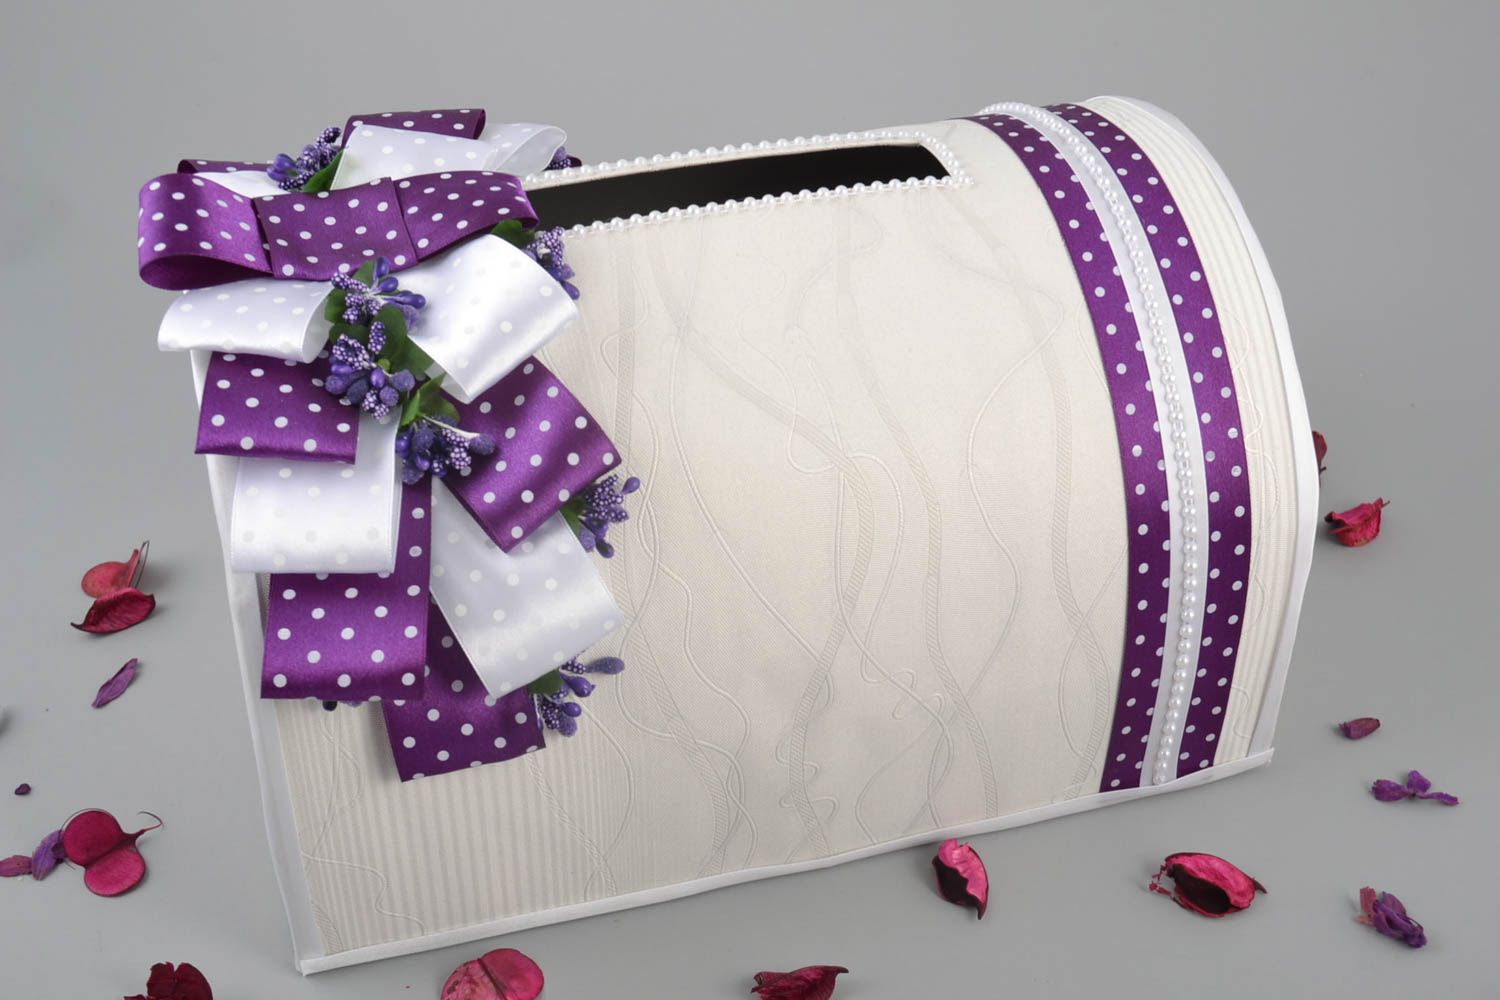 Handmade cute wedding box for envelopes made of carton with satin ribbons photo 1